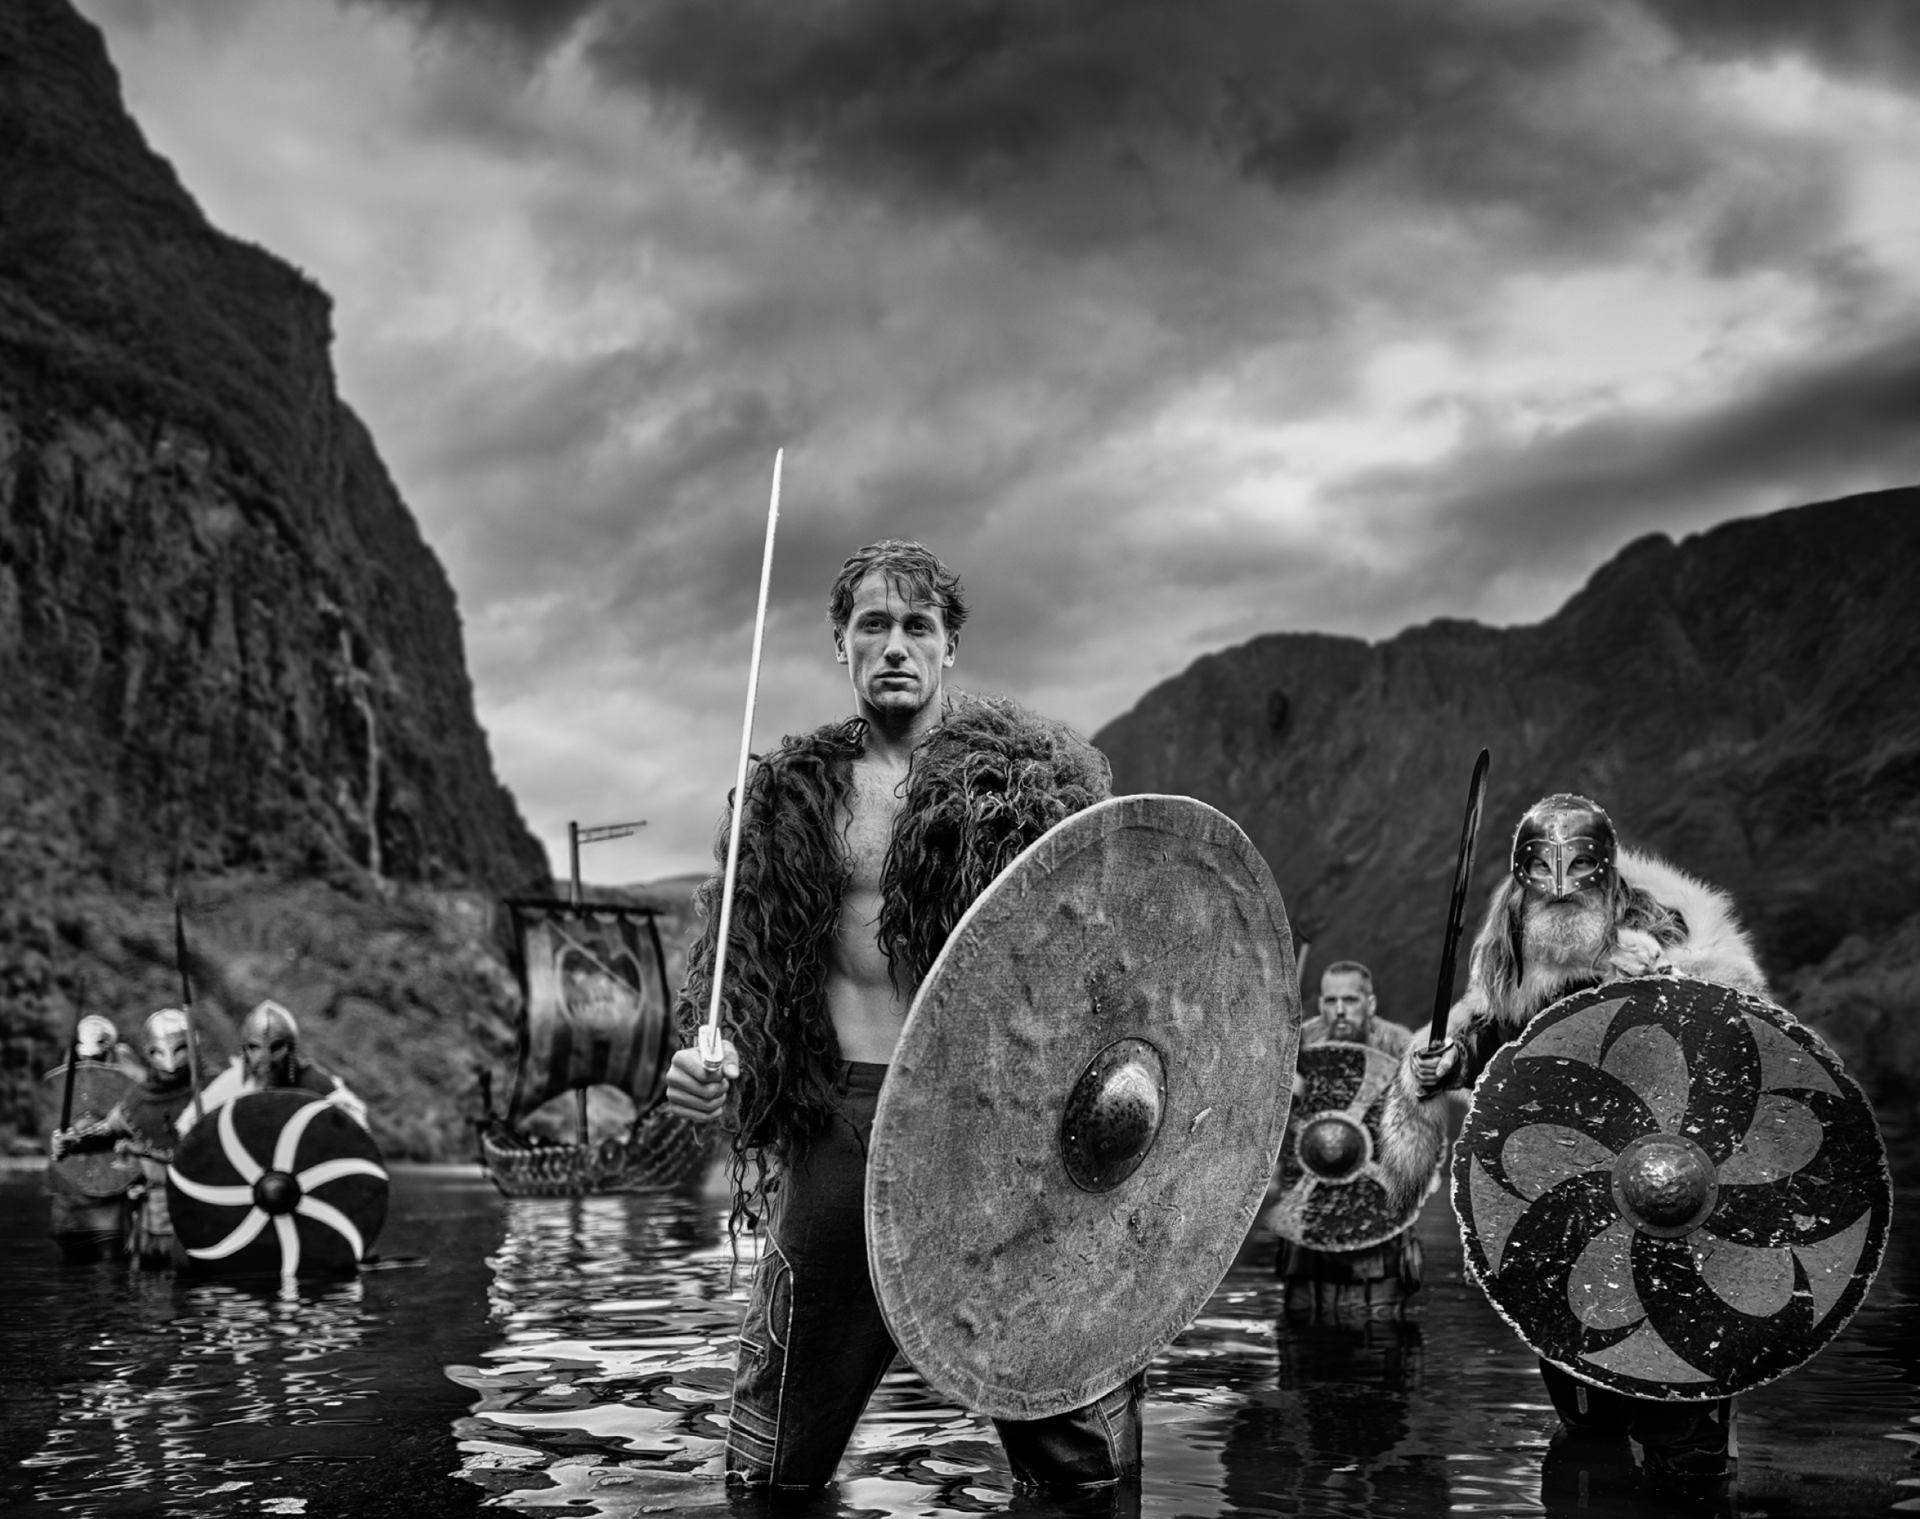 The Viking by David Yarrow